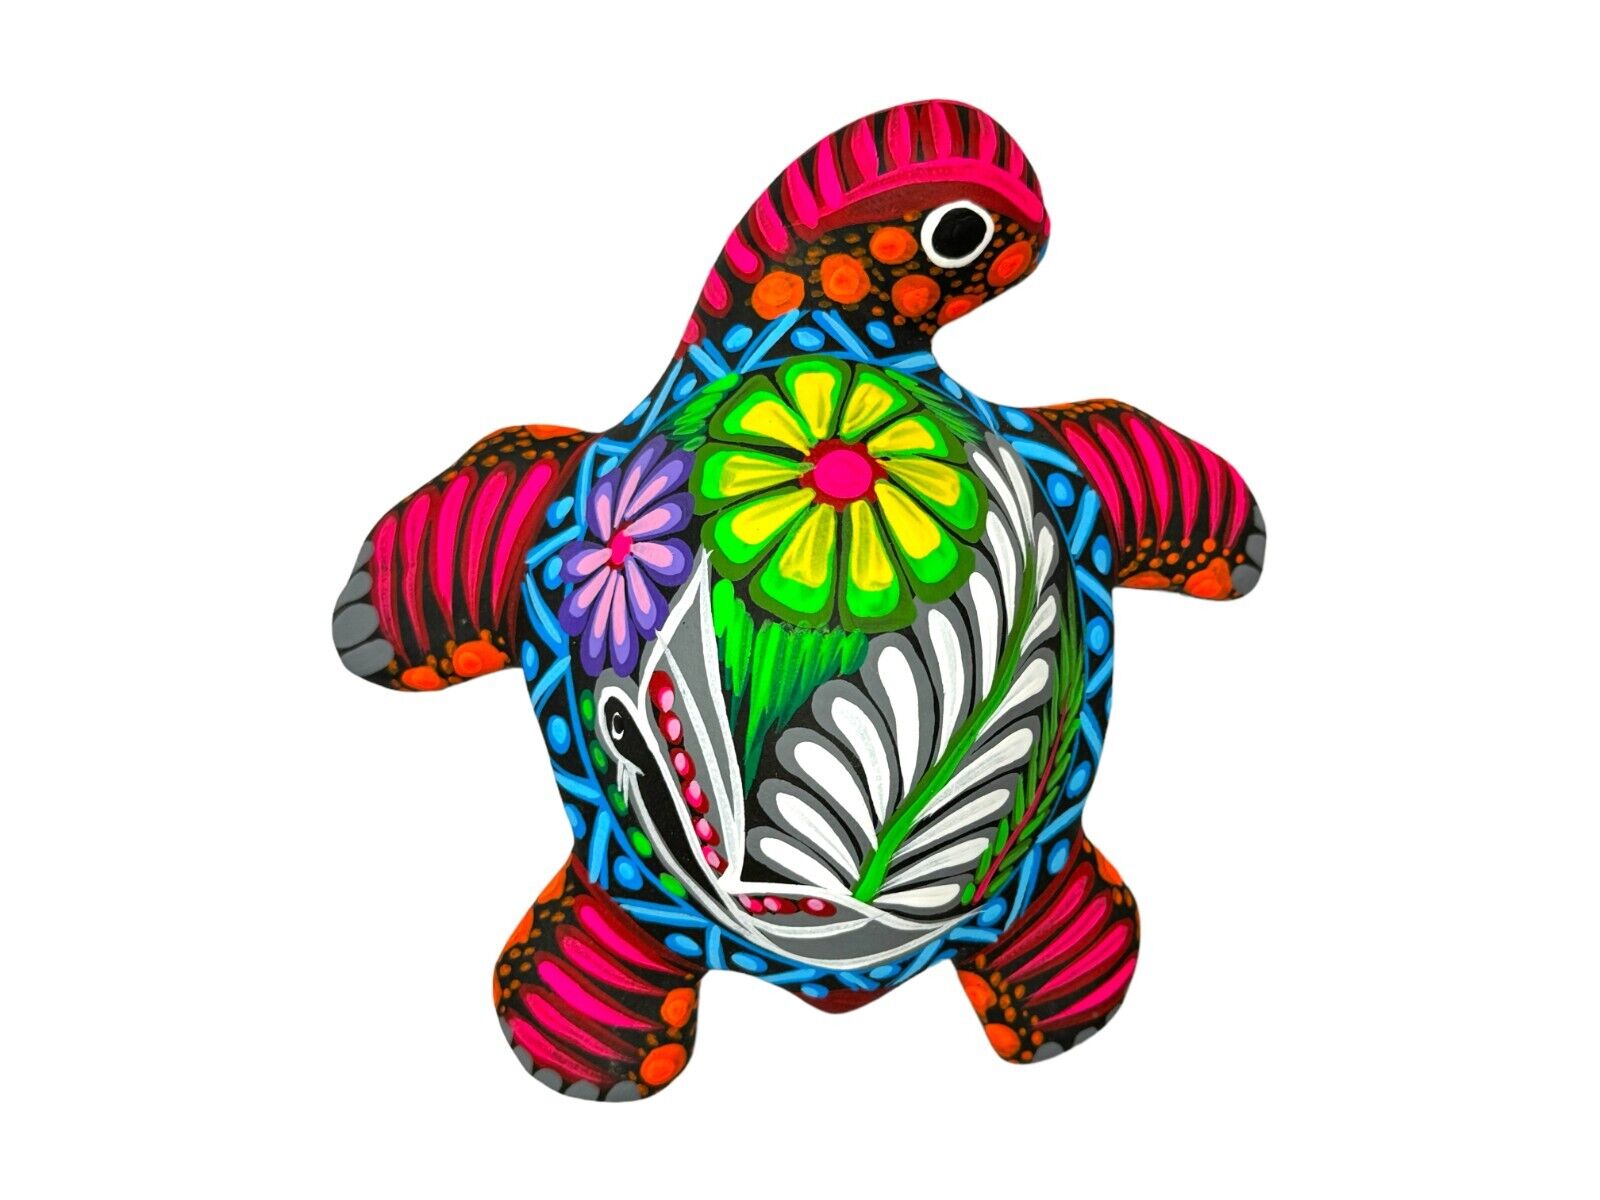 Talavera Sea Turtle Sculpture Cute Mexican Pottery Home Decor Folk Art 6.25